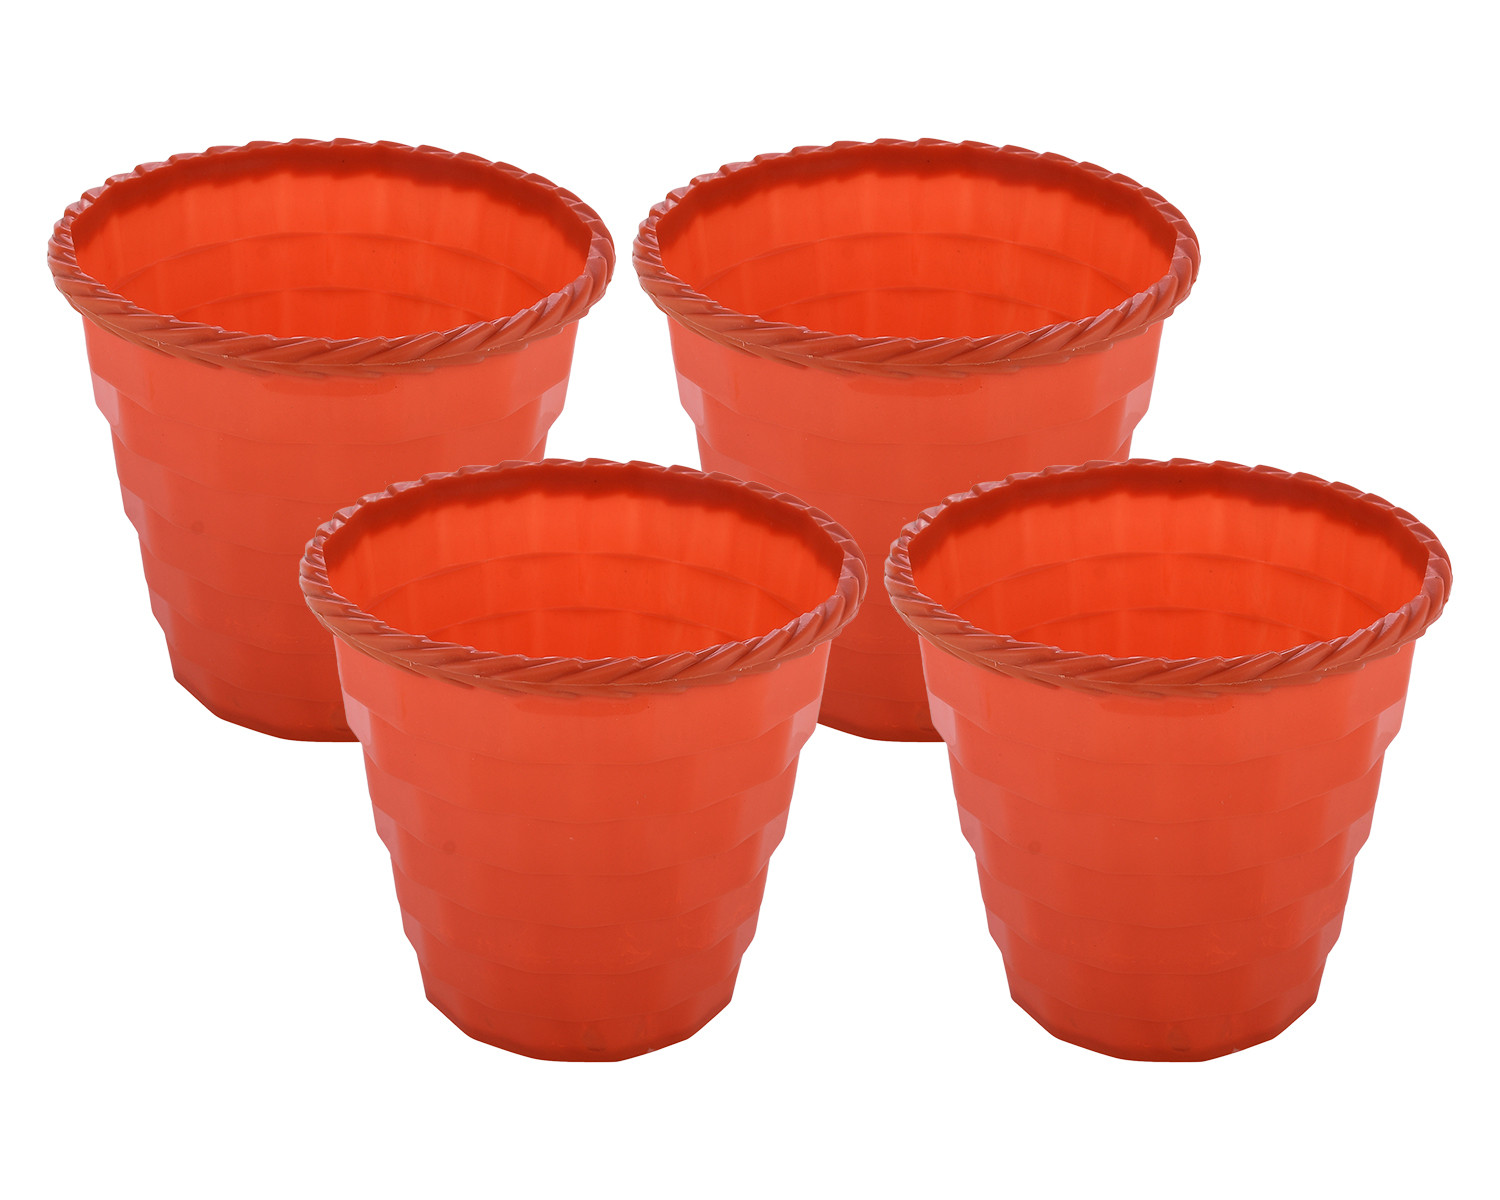 Kuber Industries Brick Flower Pot|Durable Plastic Flower Pots|Planters for Home Décor|Garden|Living Room|Balcony|8 Inch|(Orange)